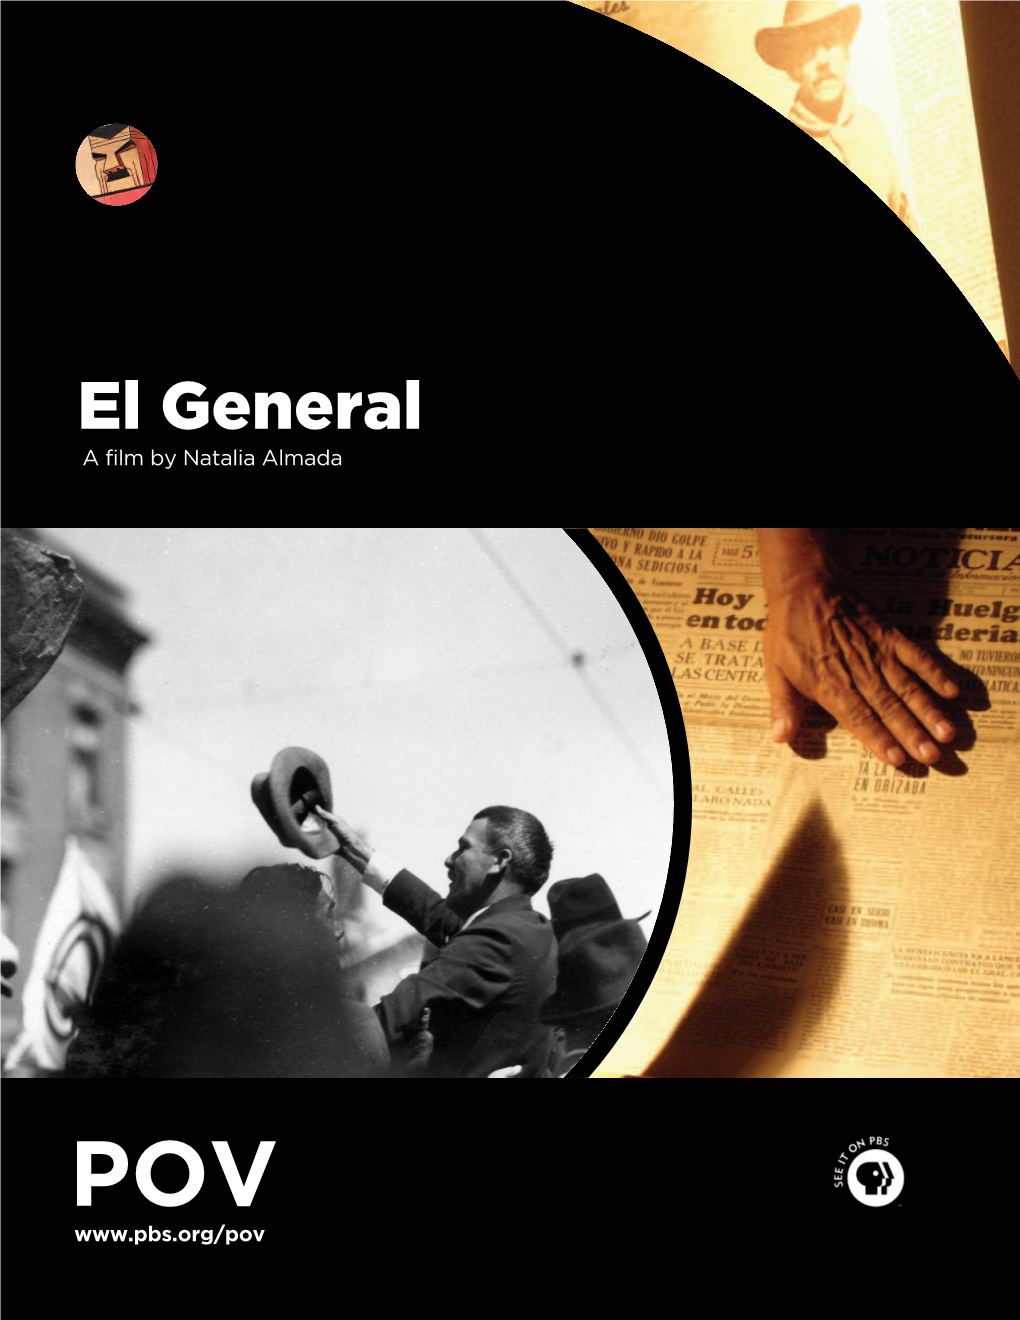 El General a Film by Natalia Almada